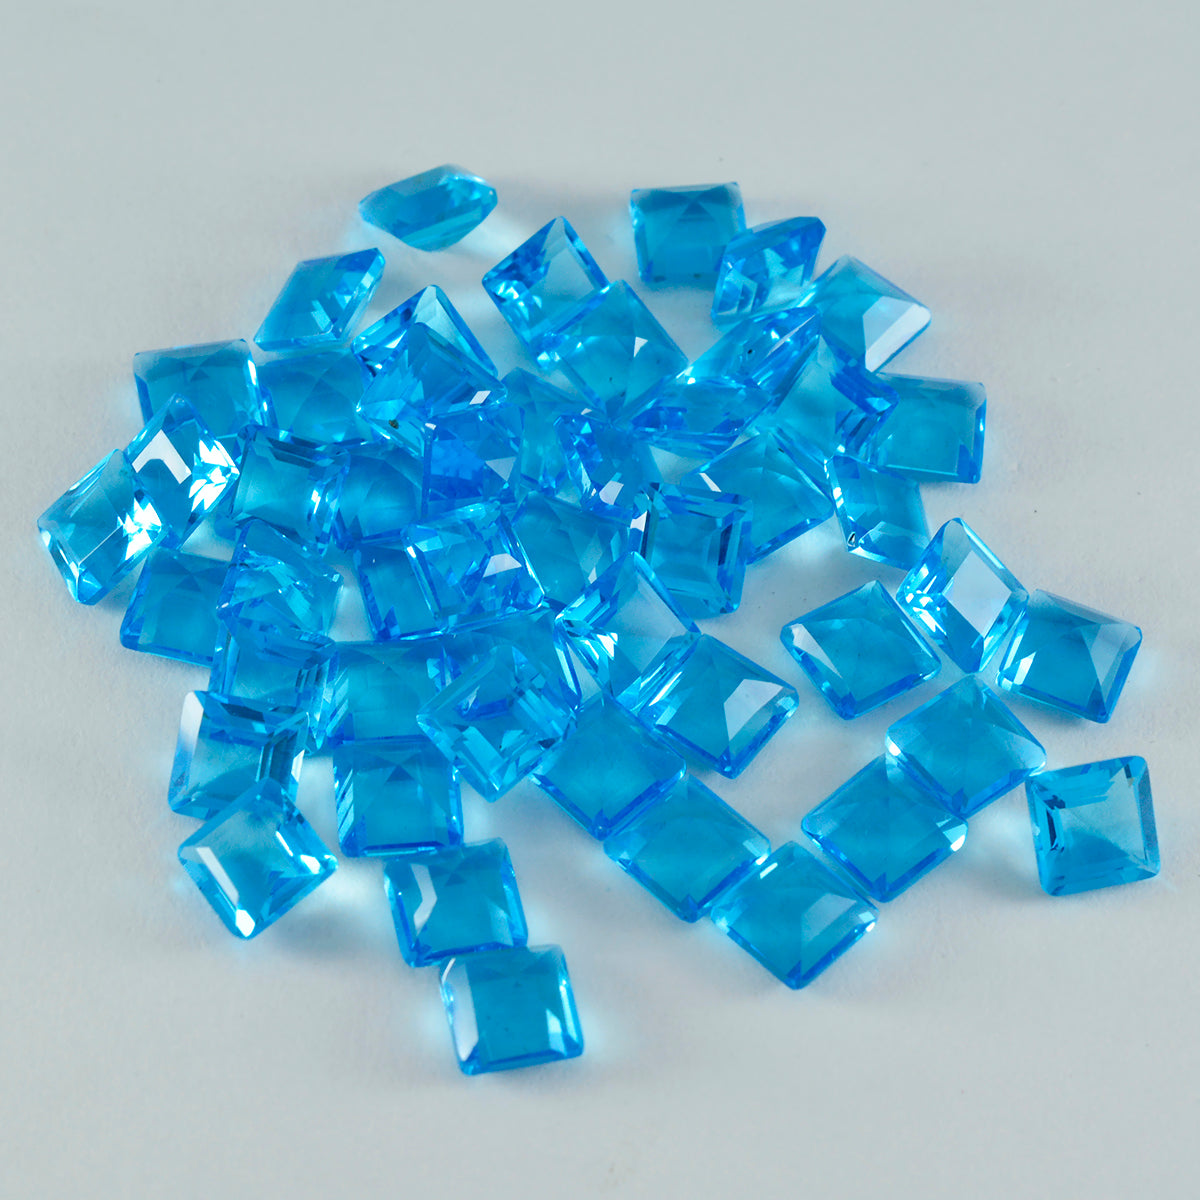 Riyogems 1PC Blue Topaz CZ Faceted 6x6 mm Square Shape attractive Quality Gems